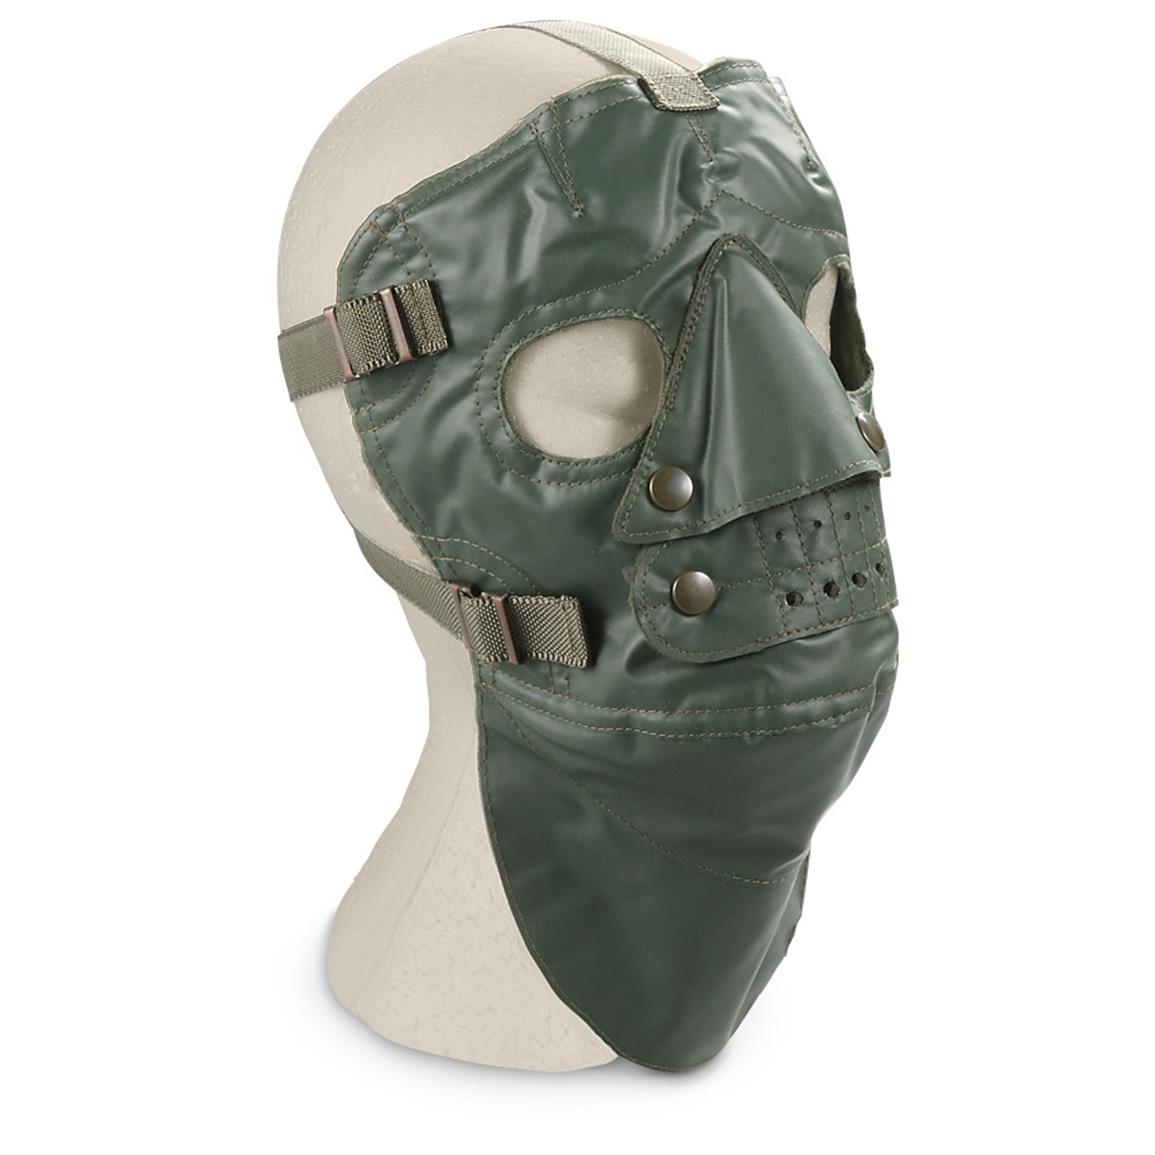 2 New Dutch Military Surplus ECW Face Masks - 421325, Hats & Caps at ...